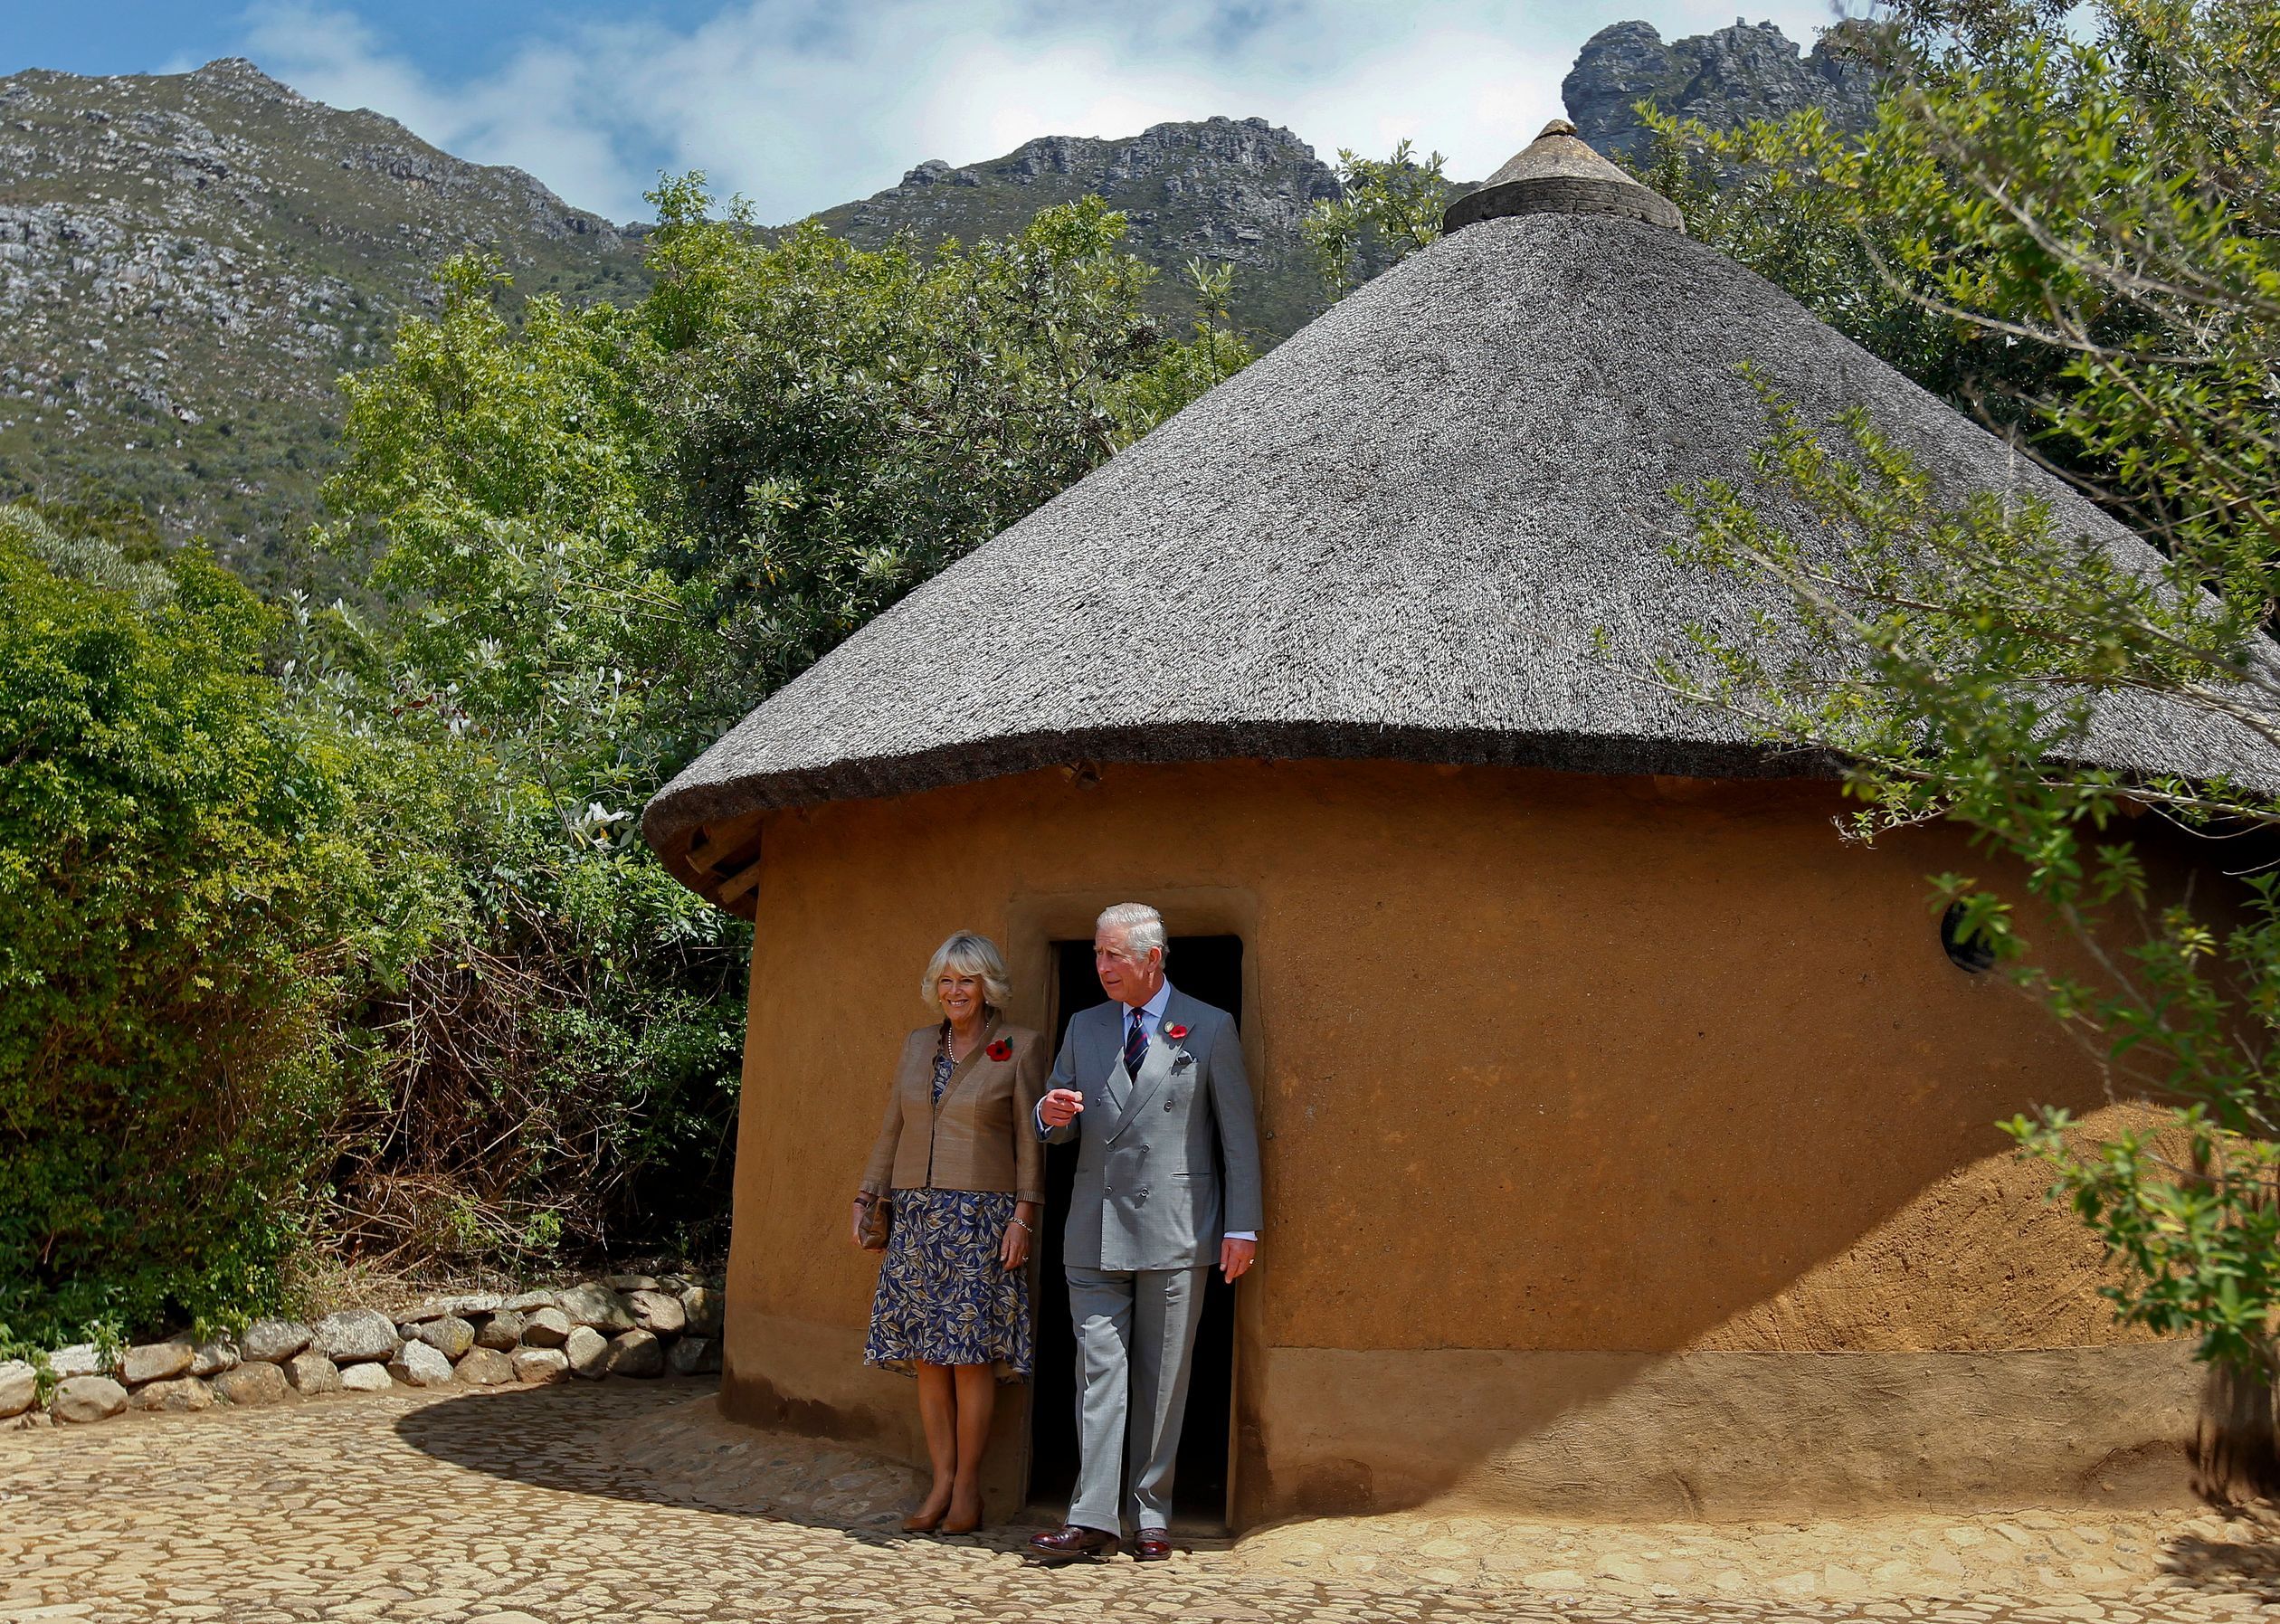 Charles en Camilla in Zuid-Afrika.